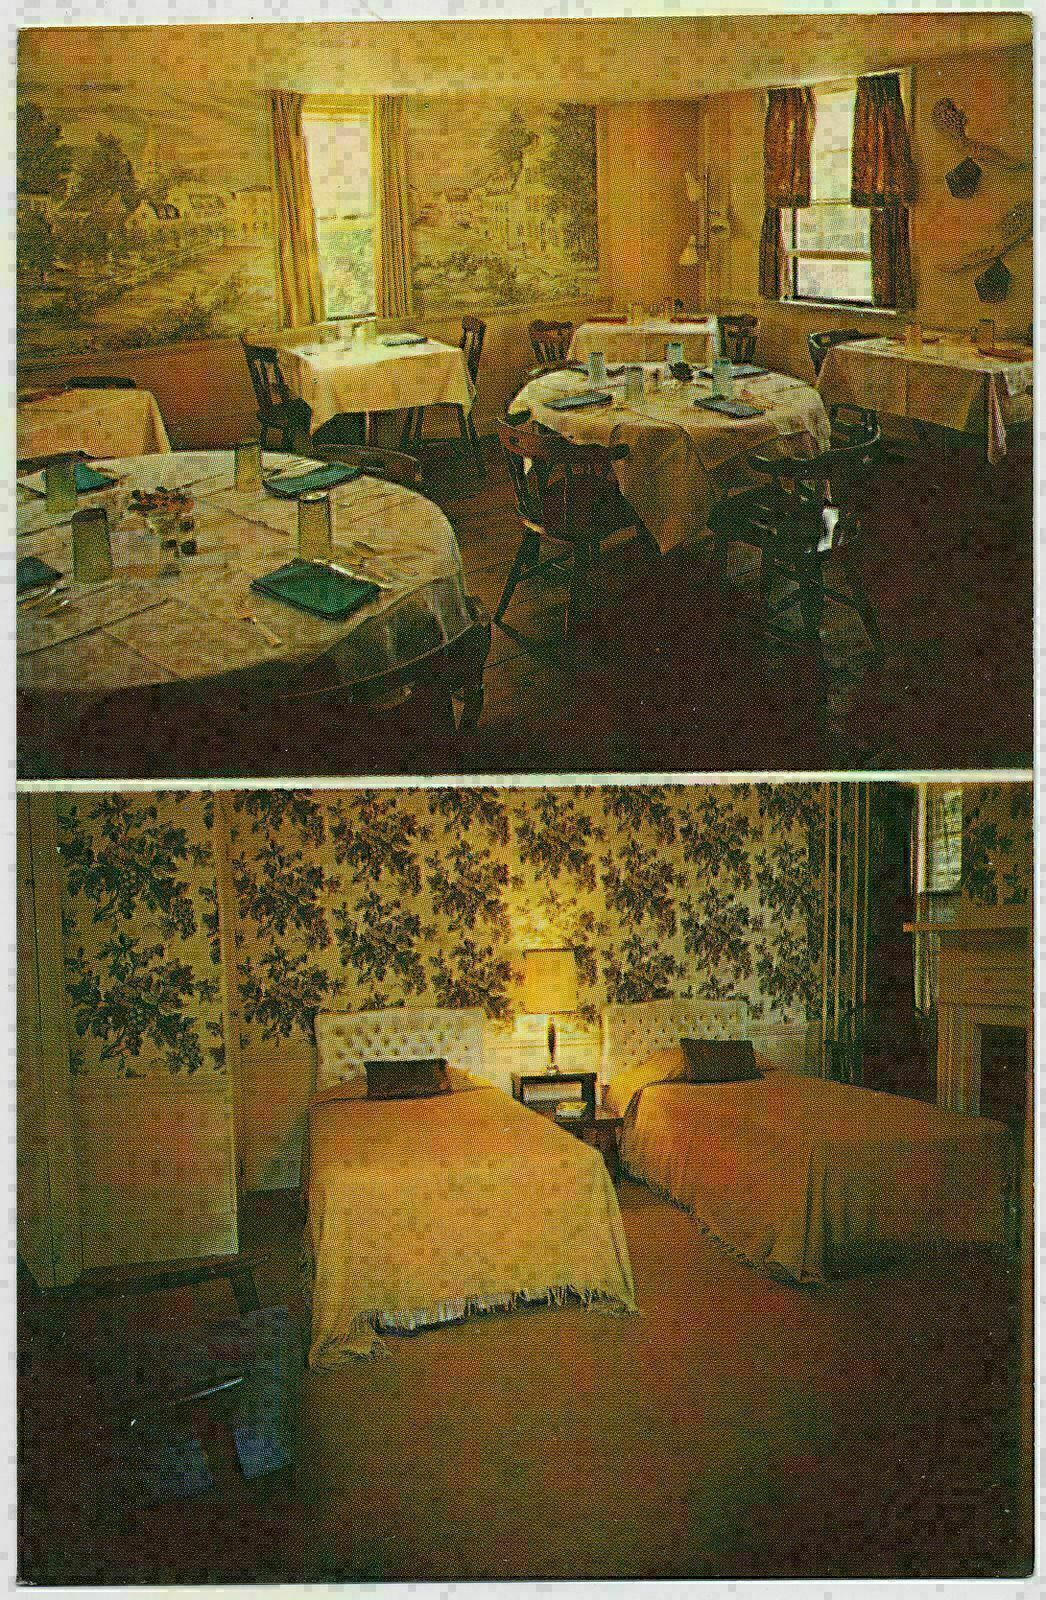 Tuck-Inn Lodge and Dining Room, Rockport, Massachusetts